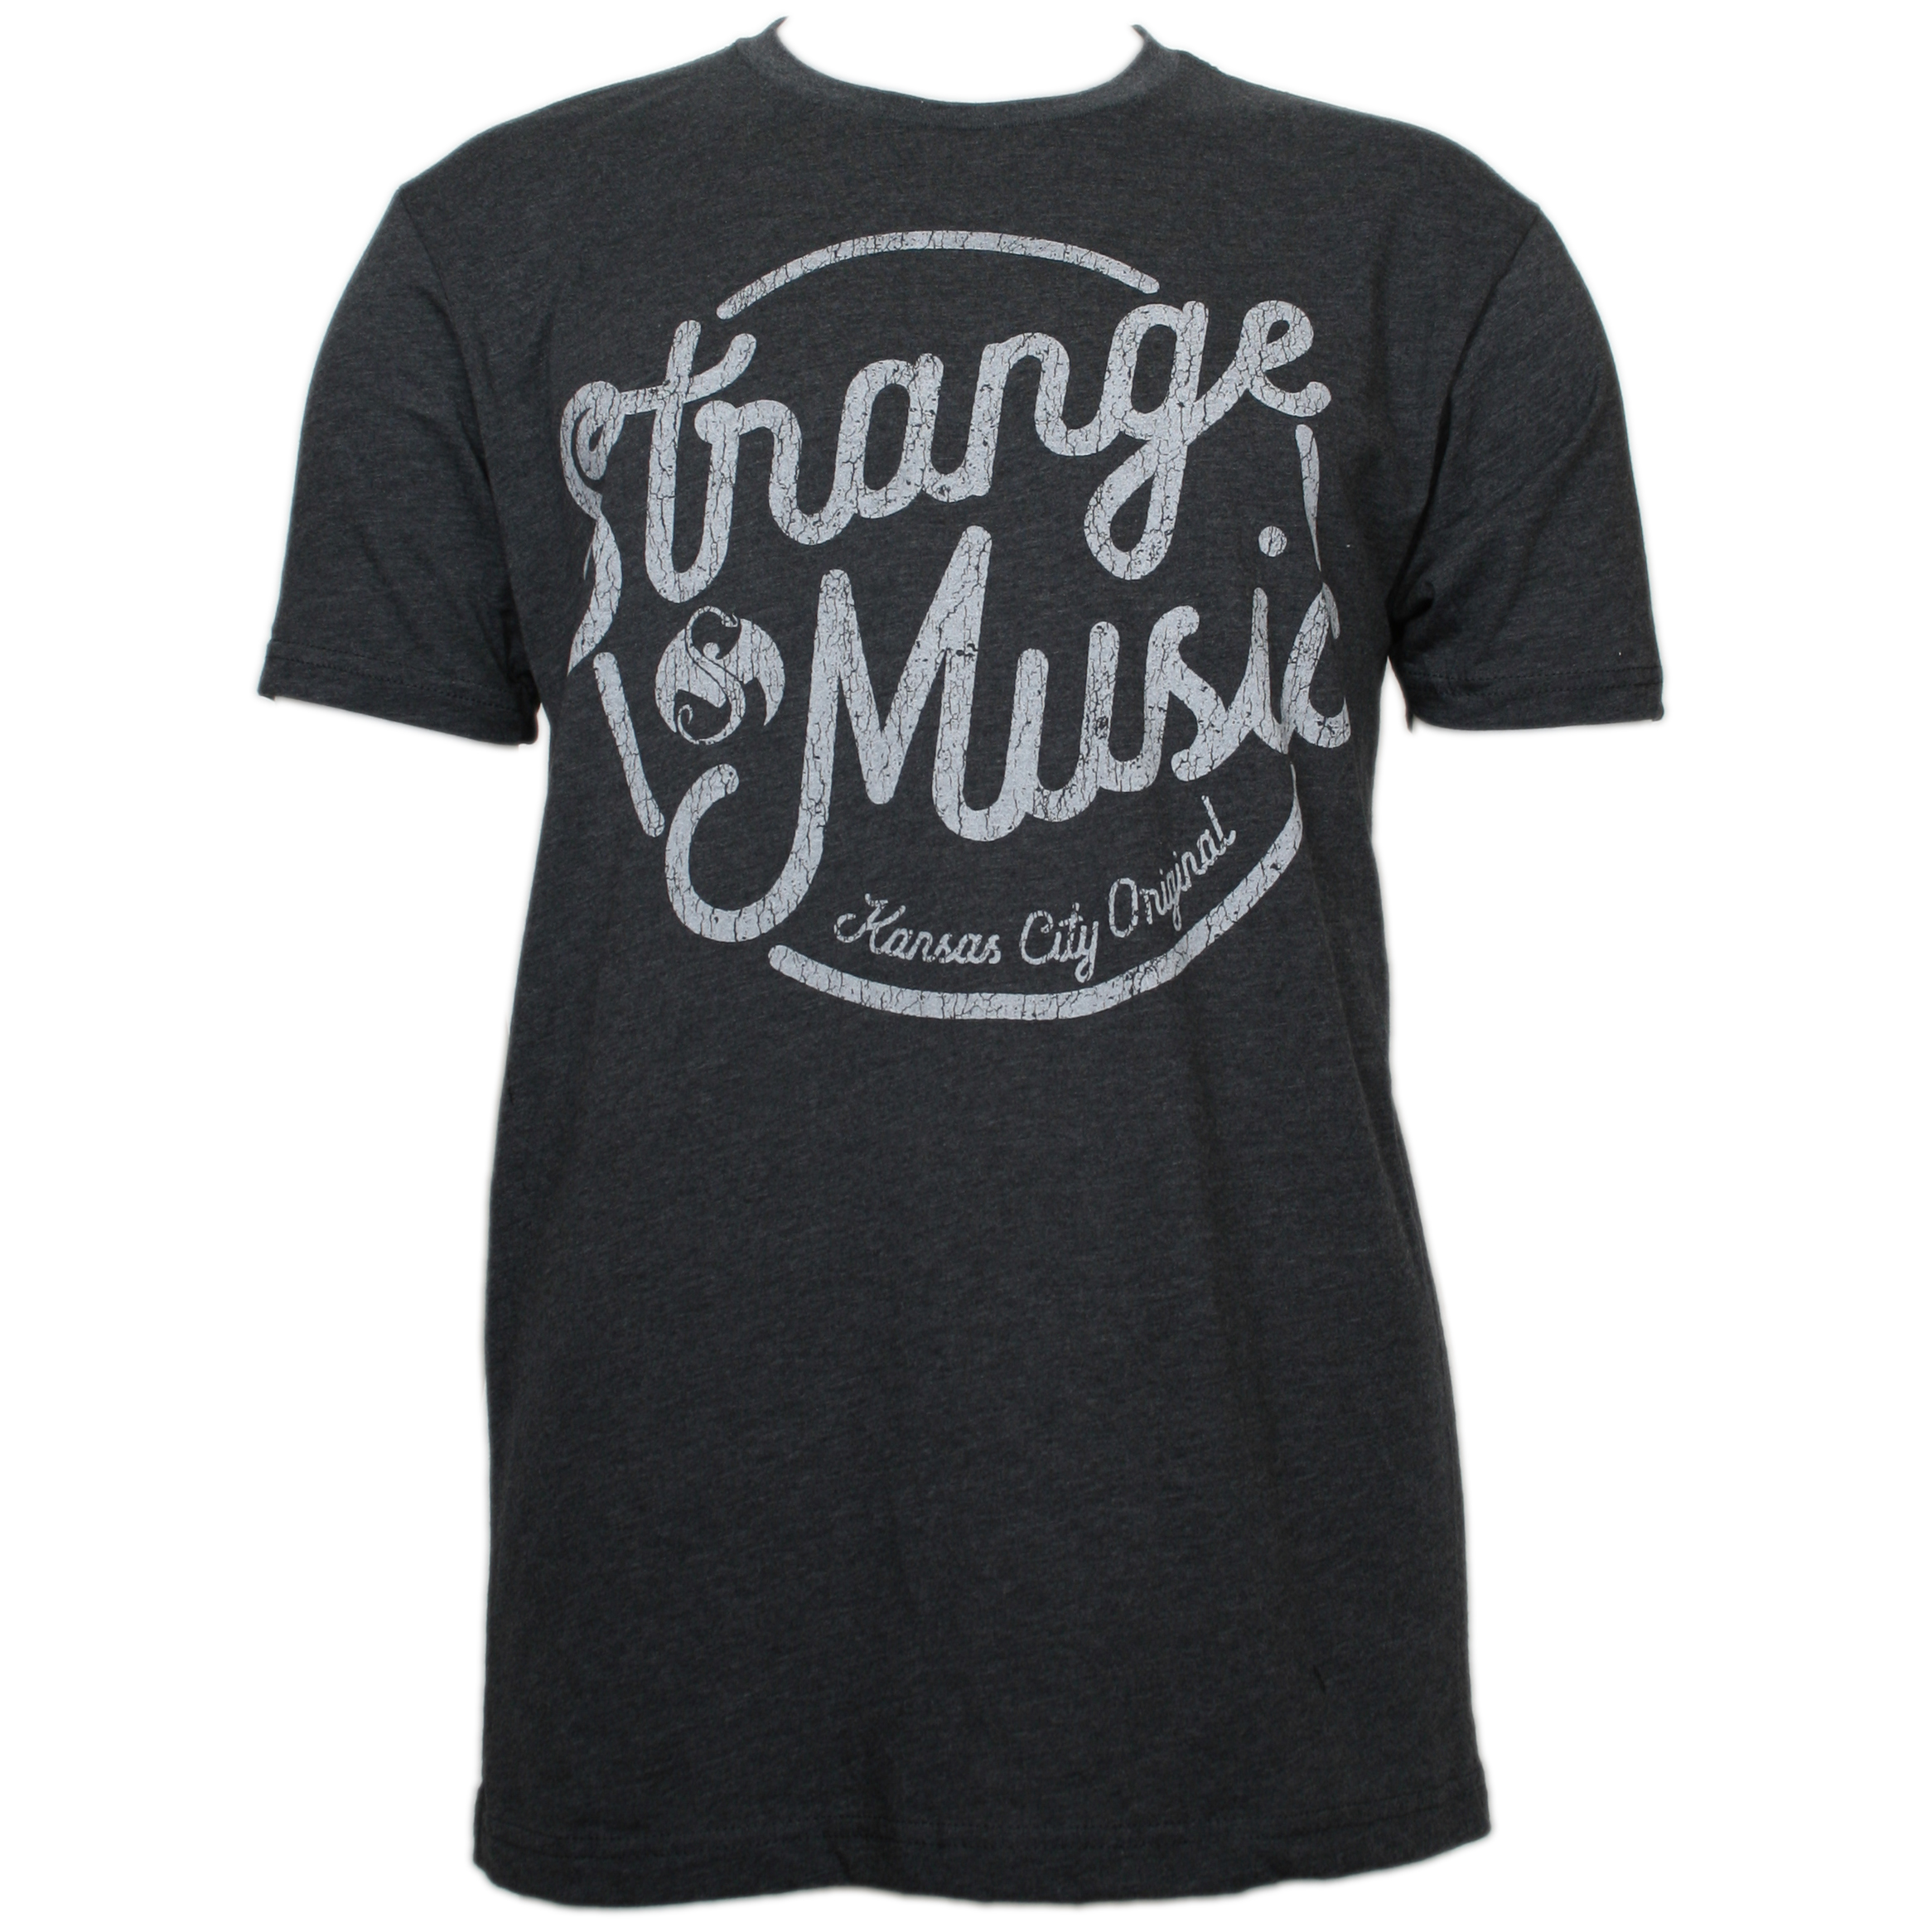 Mens Vintage T-Shirts - Strange Music, Inc Store